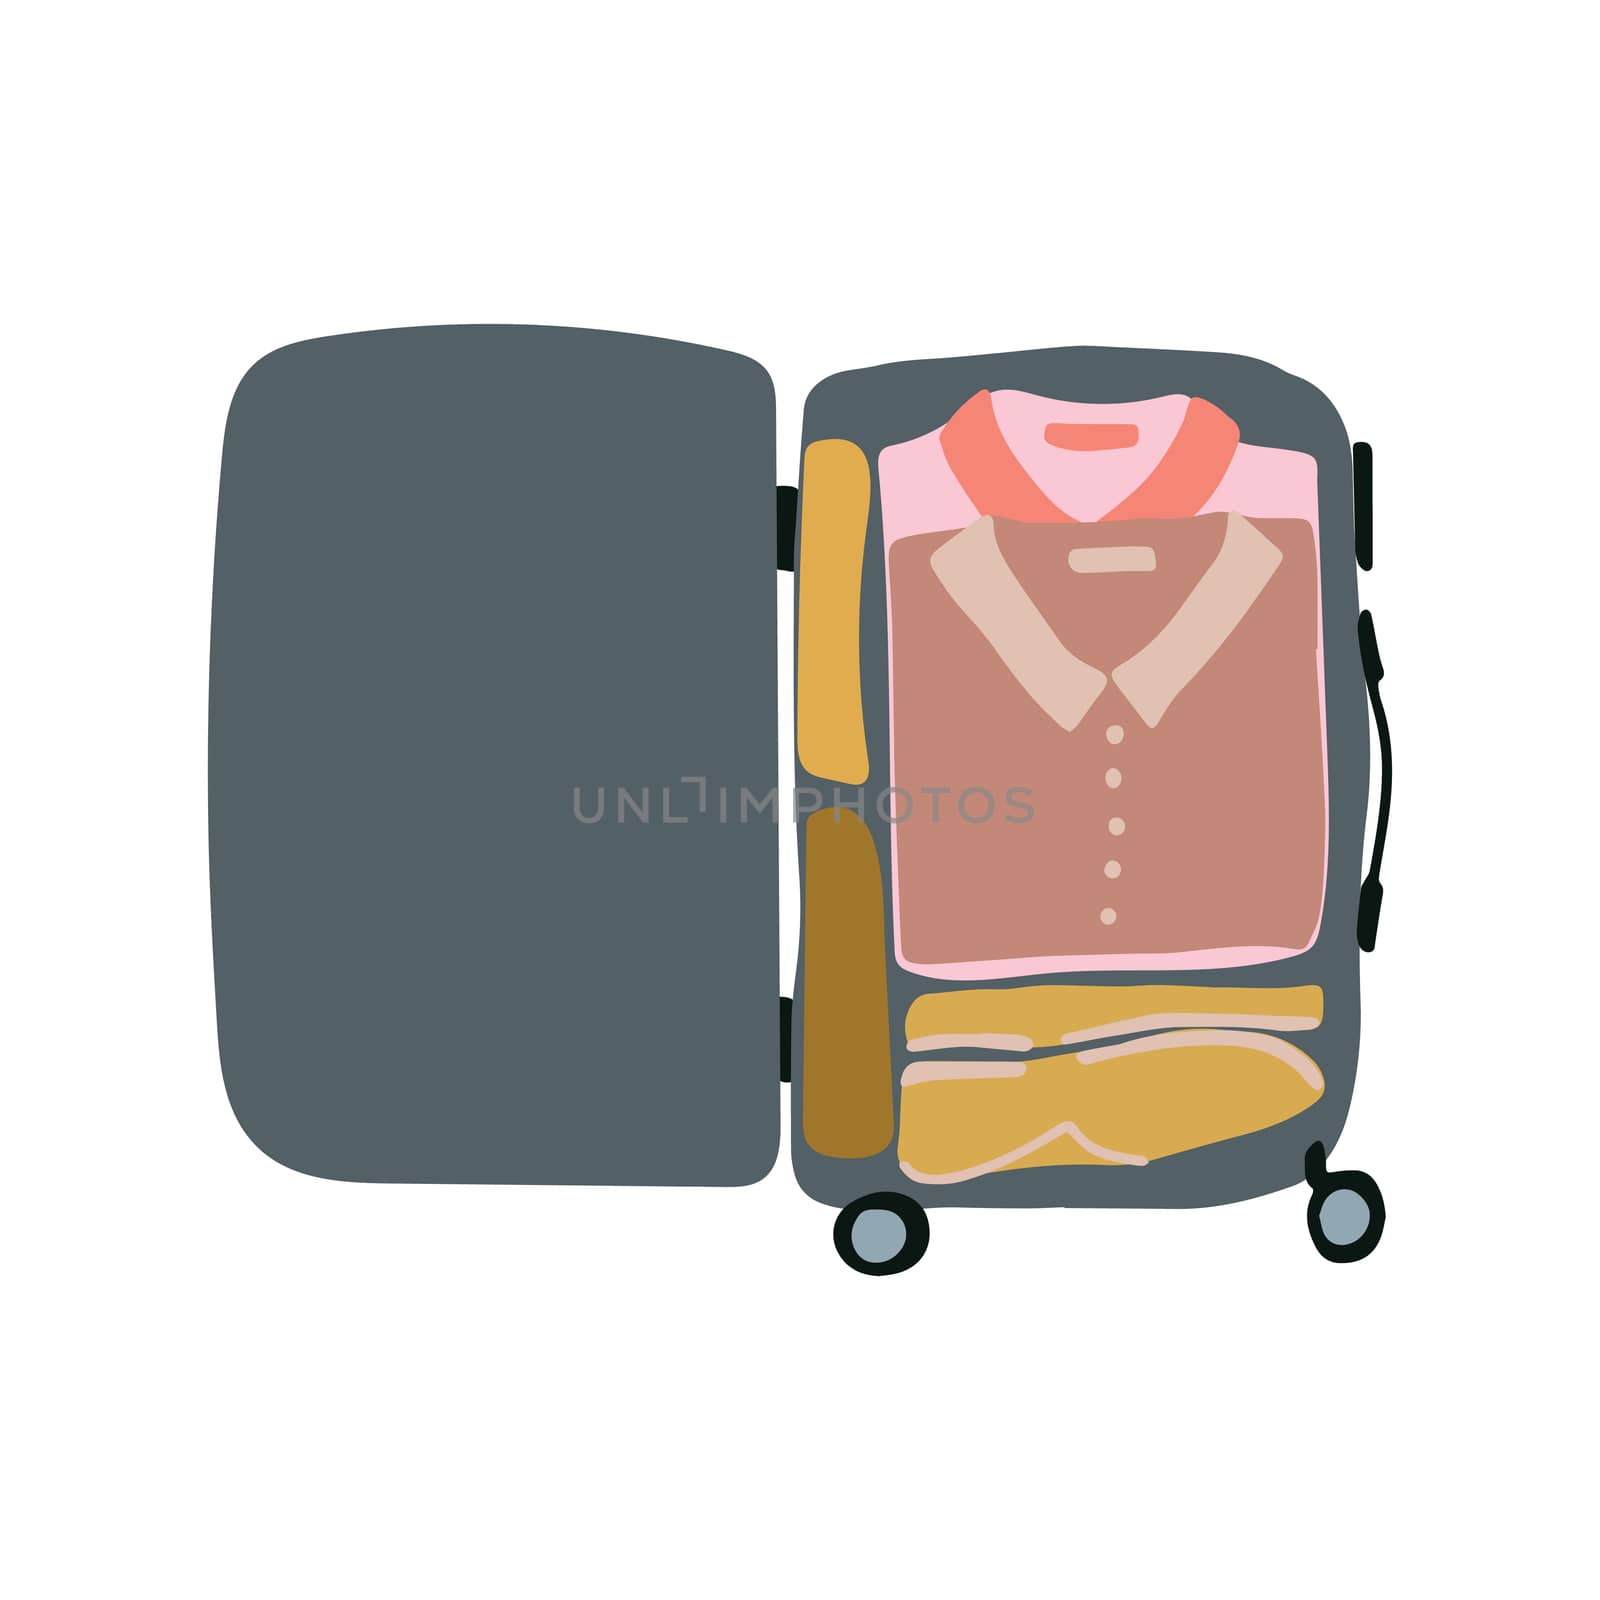 Small packed luggage by Nata_Prando